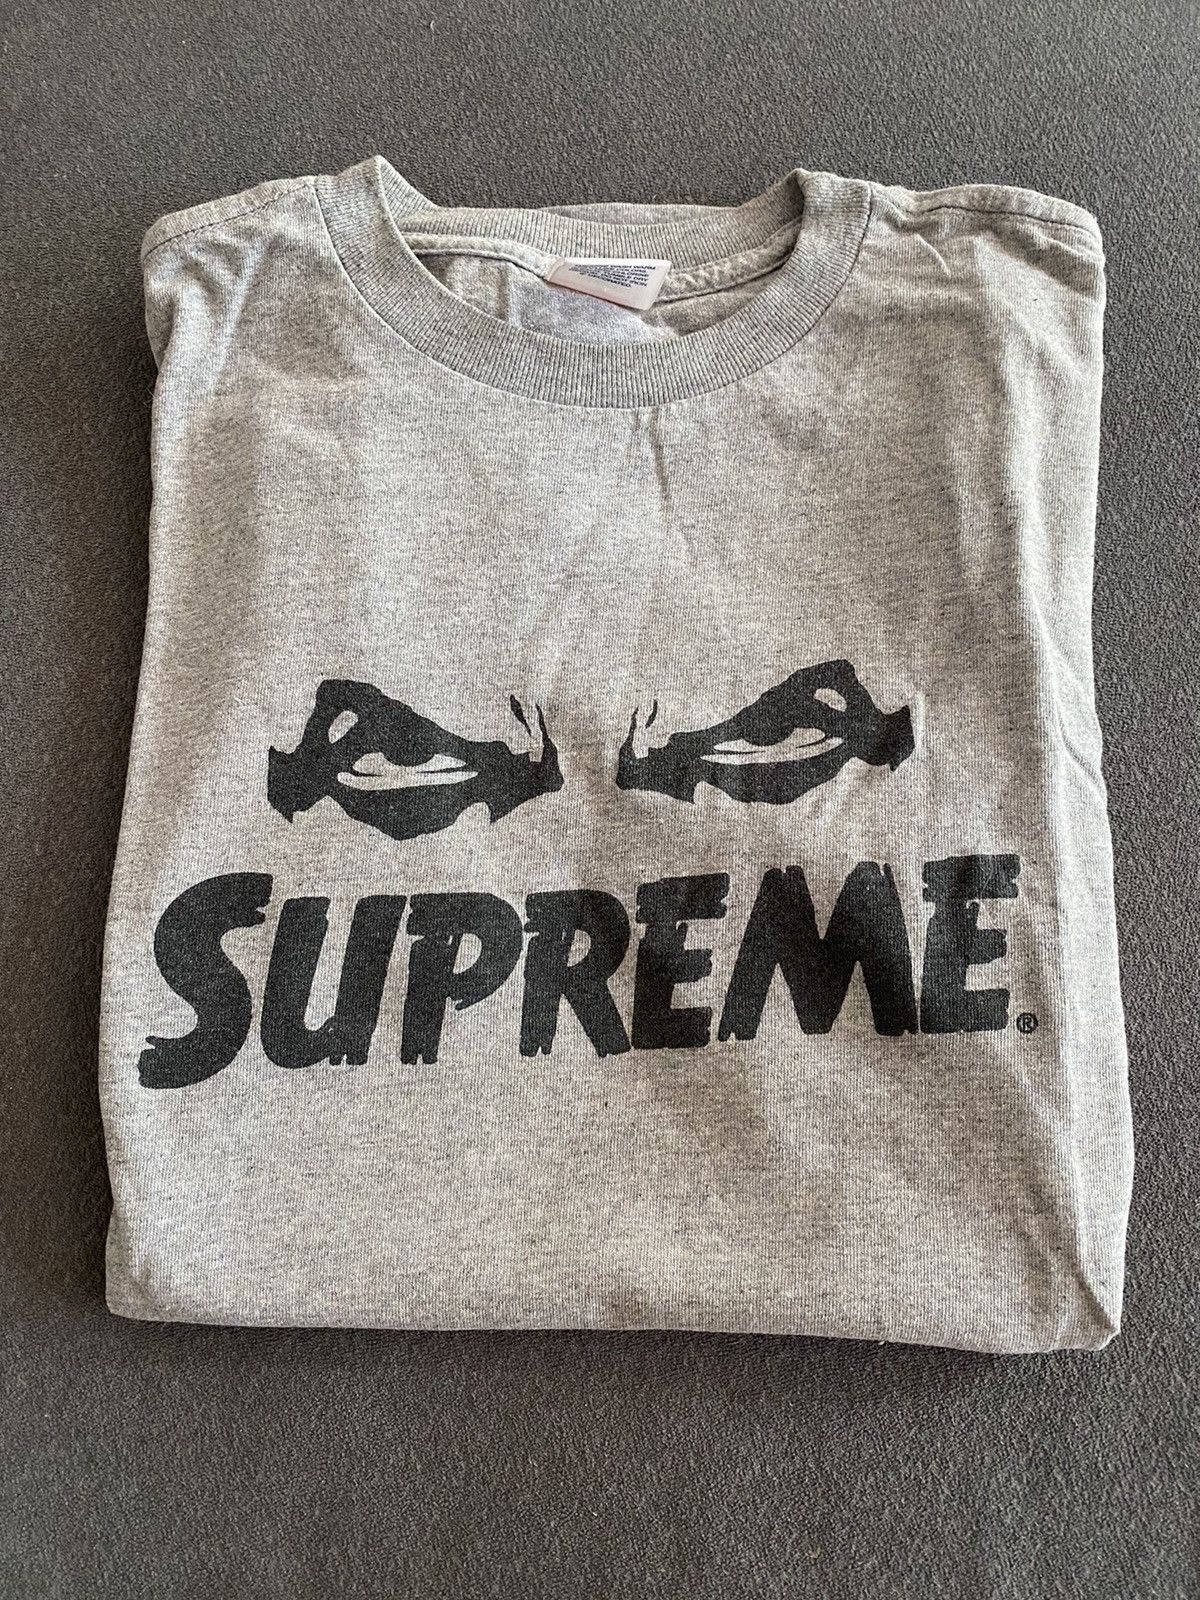 Supreme Eyes Shirt | Grailed